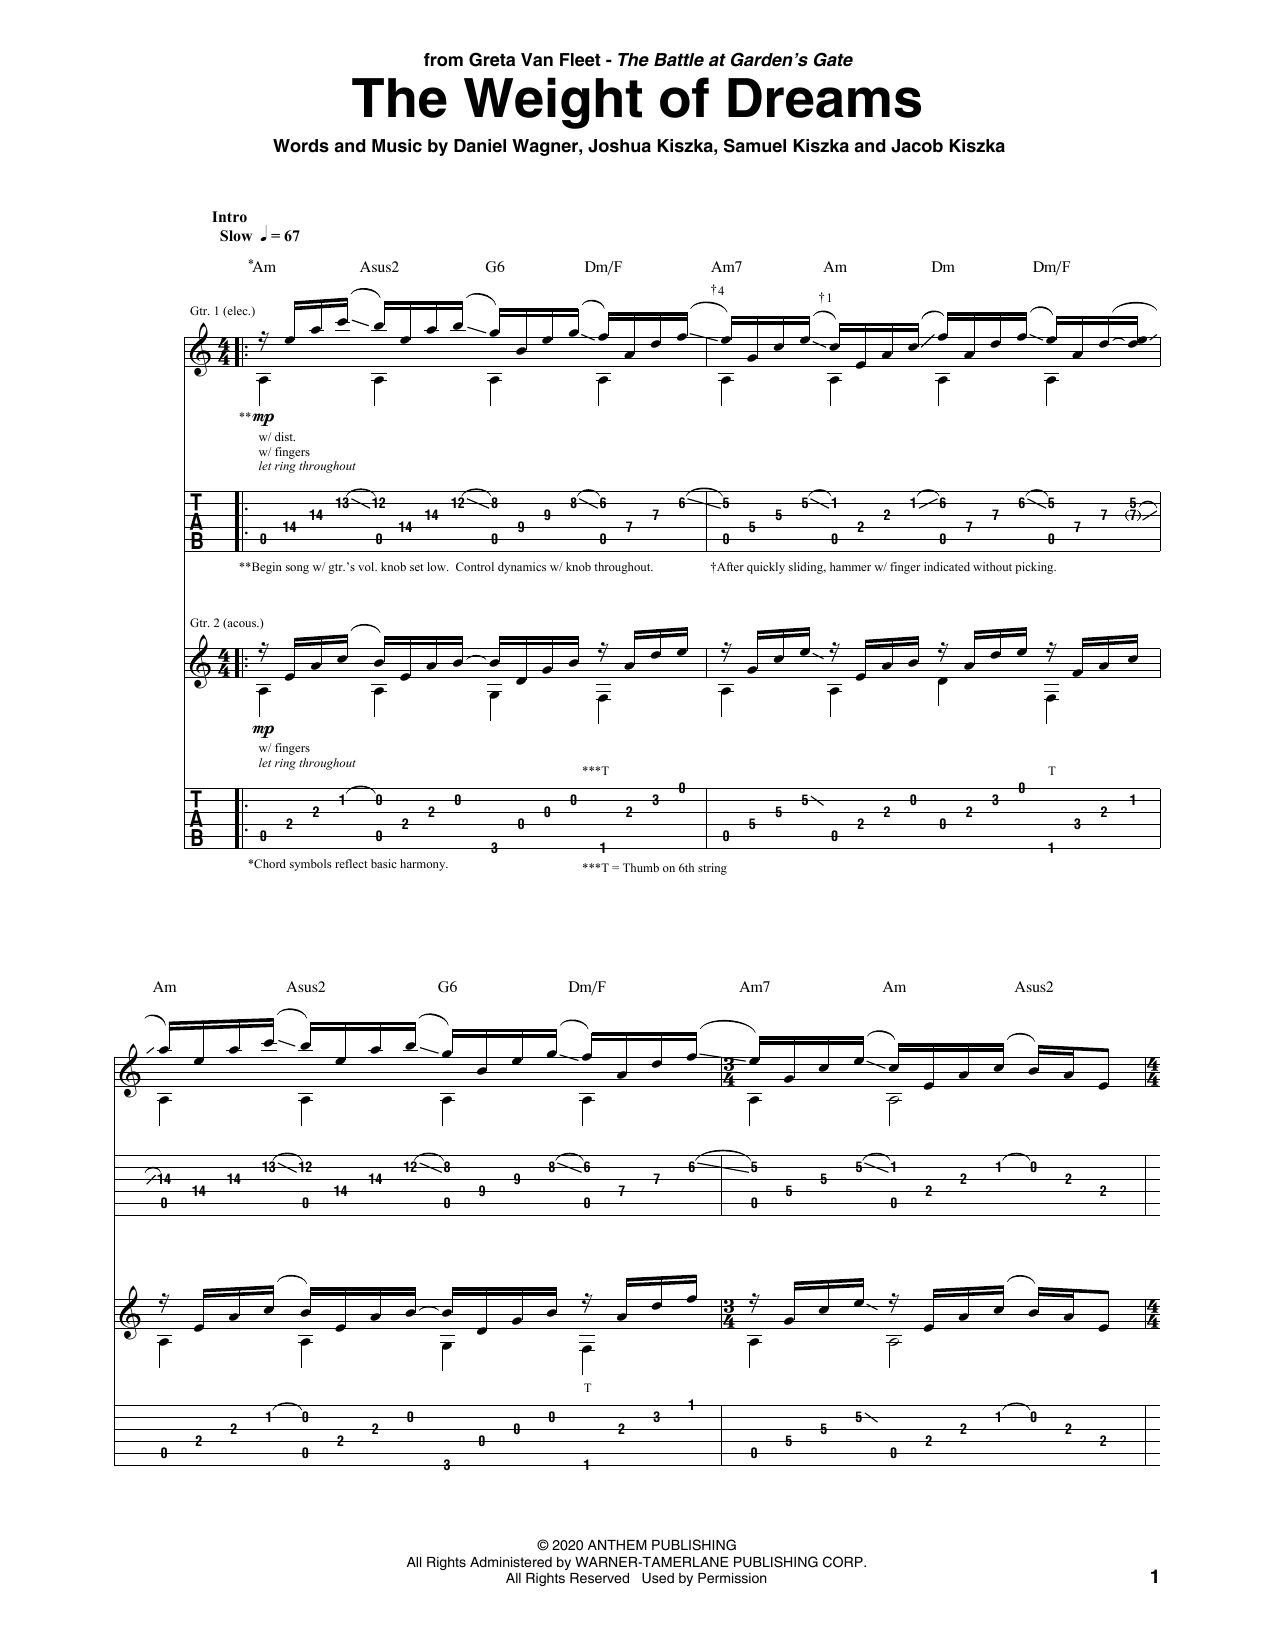 Greta Van Fleet The Weight Of Dreams Sheet Music Notes & Chords for Guitar Tab - Download or Print PDF